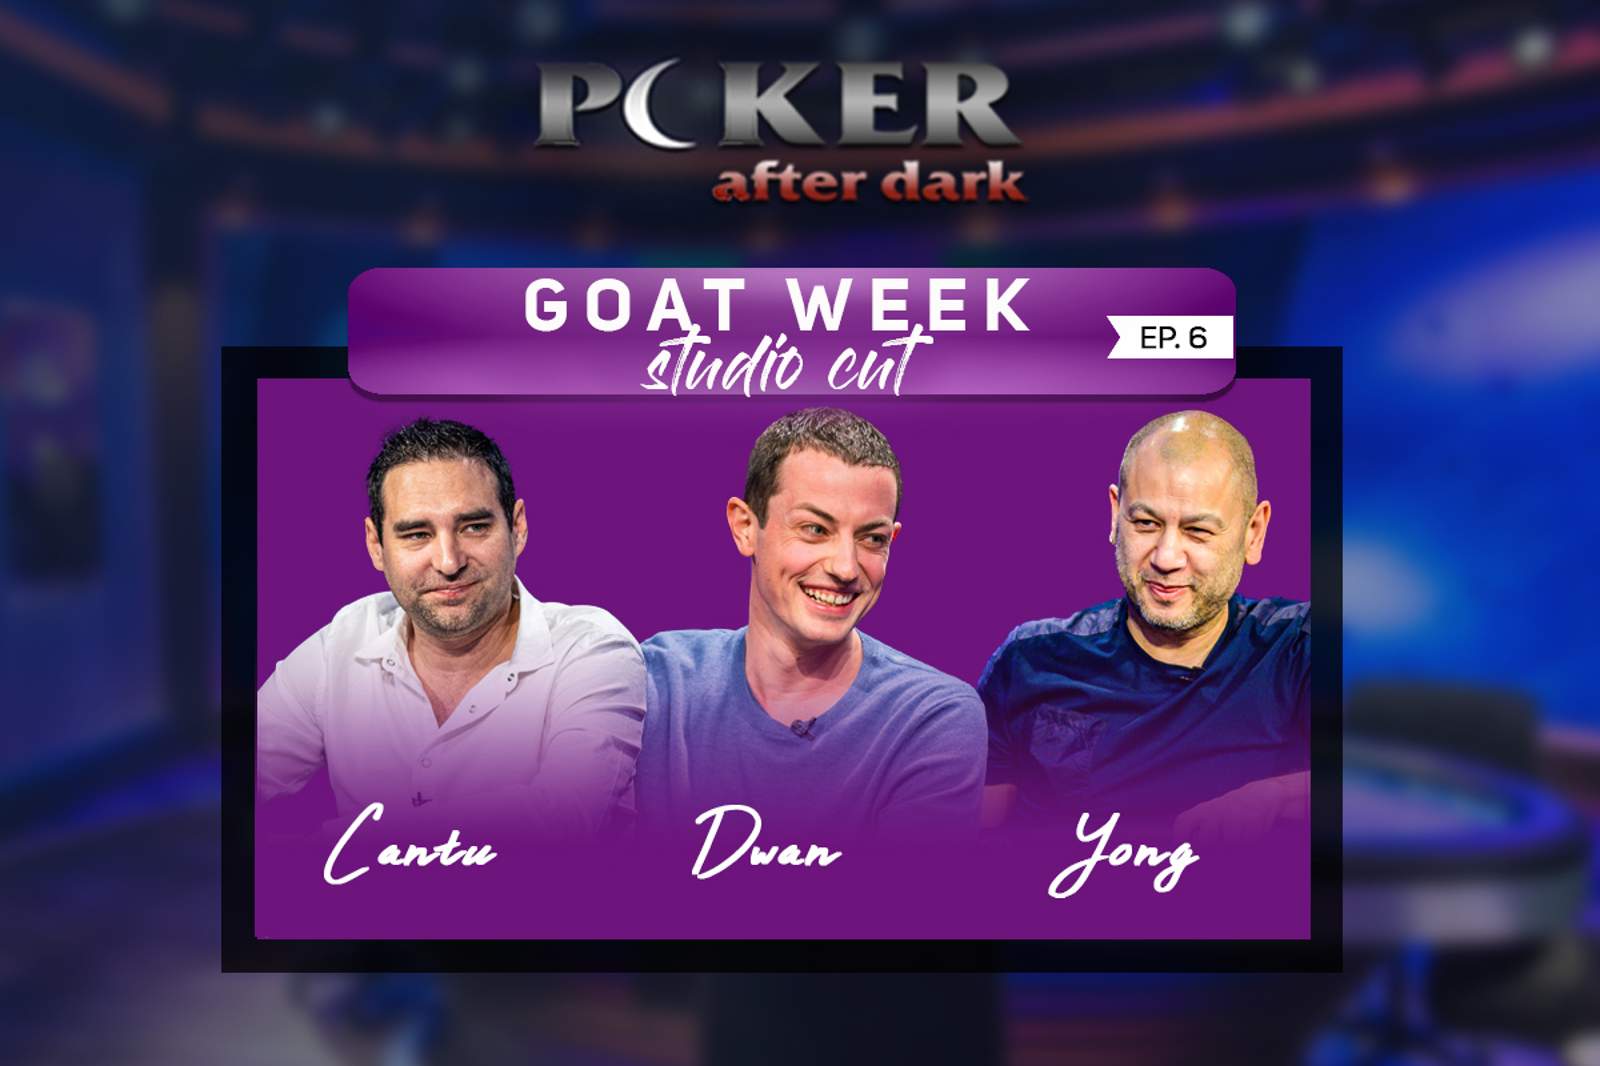 Poker After Dark Studio Cut Episode 6 on Tonight at 8 p.m. ET